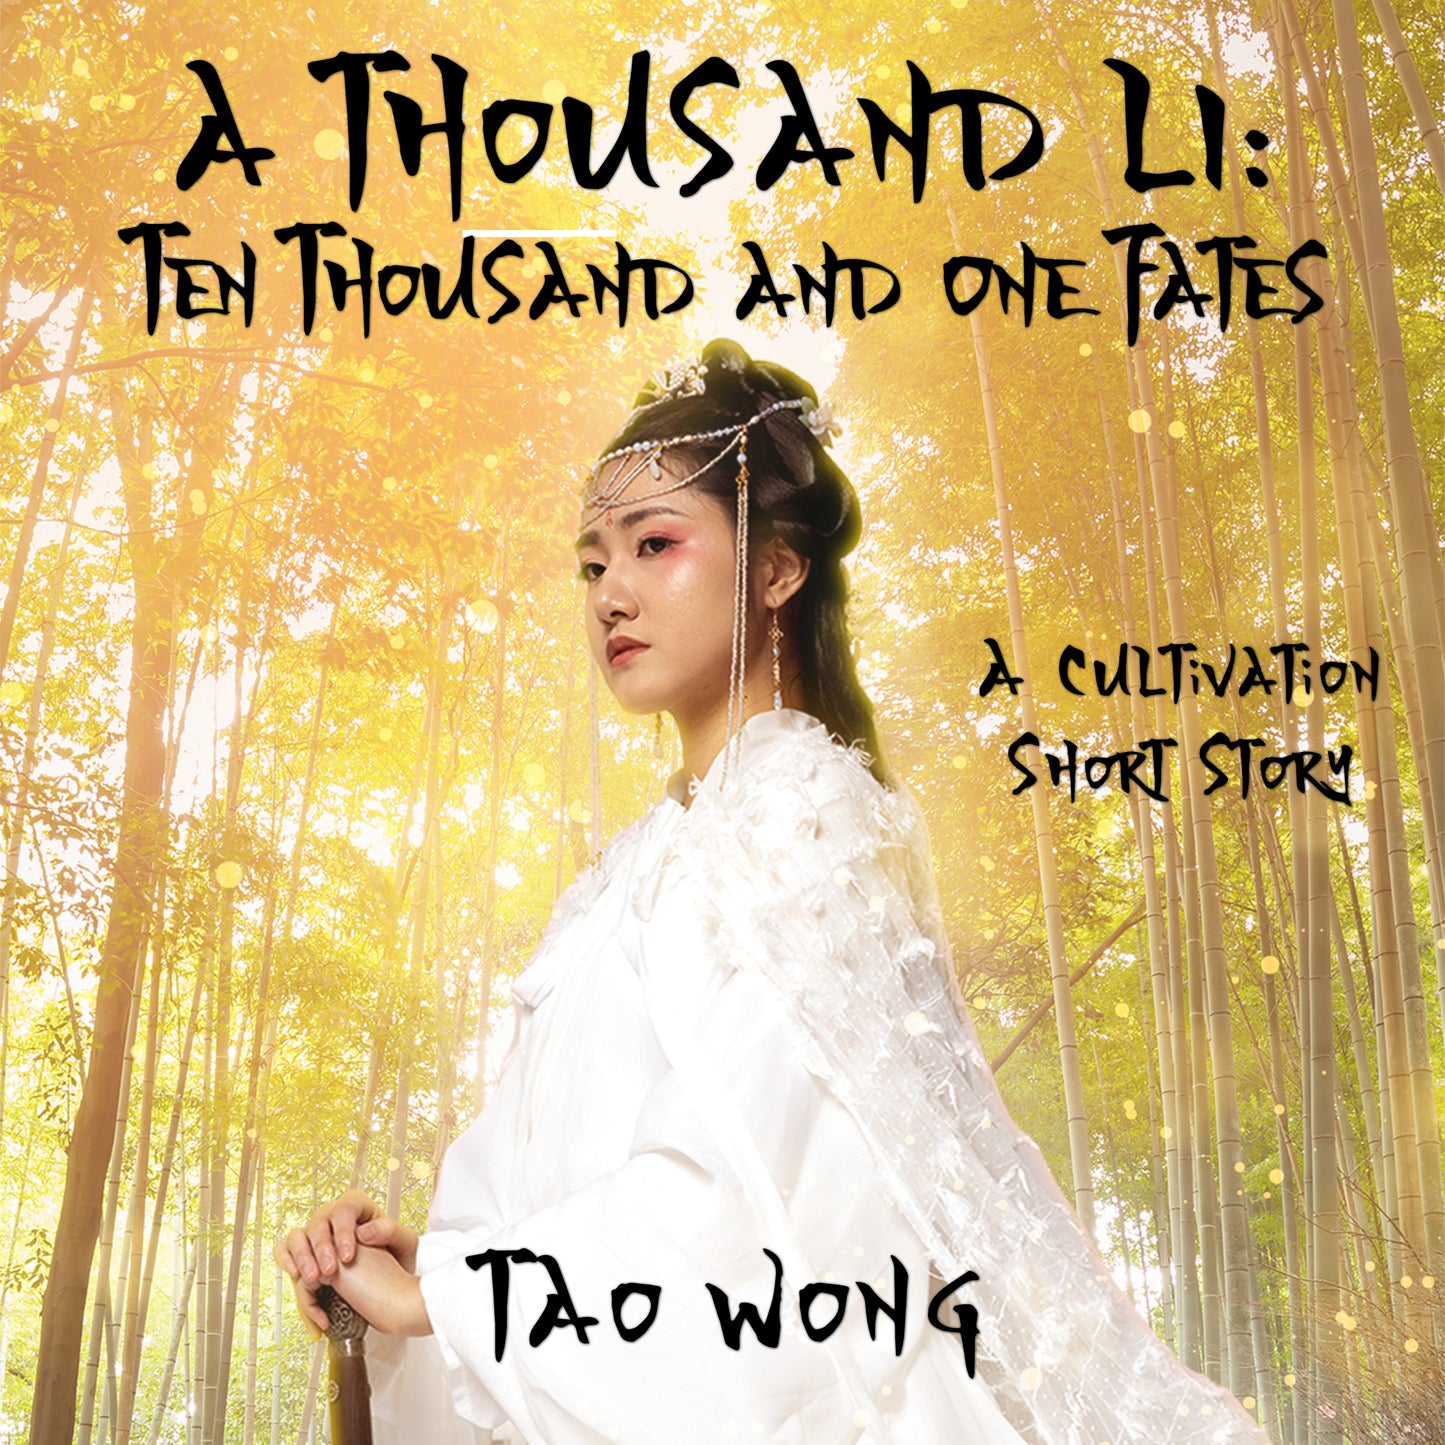 Ten Thousand and One Fates (A Thousand Li Short Story)